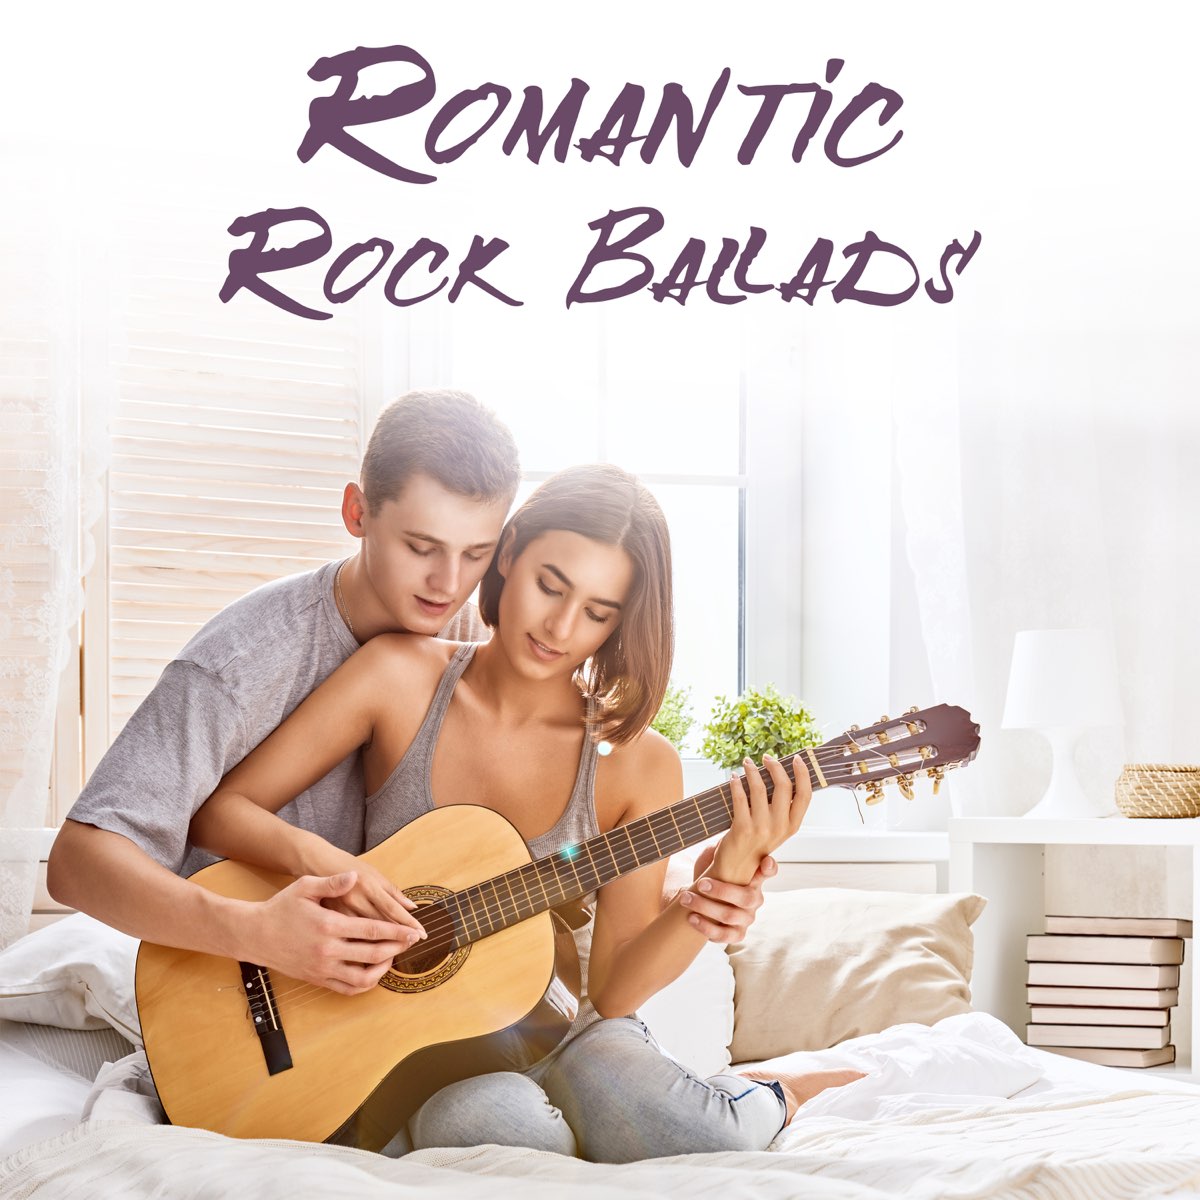 Альбом romance. Романтичный рок. Romantic Ballads. Romantic collection обложки. Обложка романтического альбома.